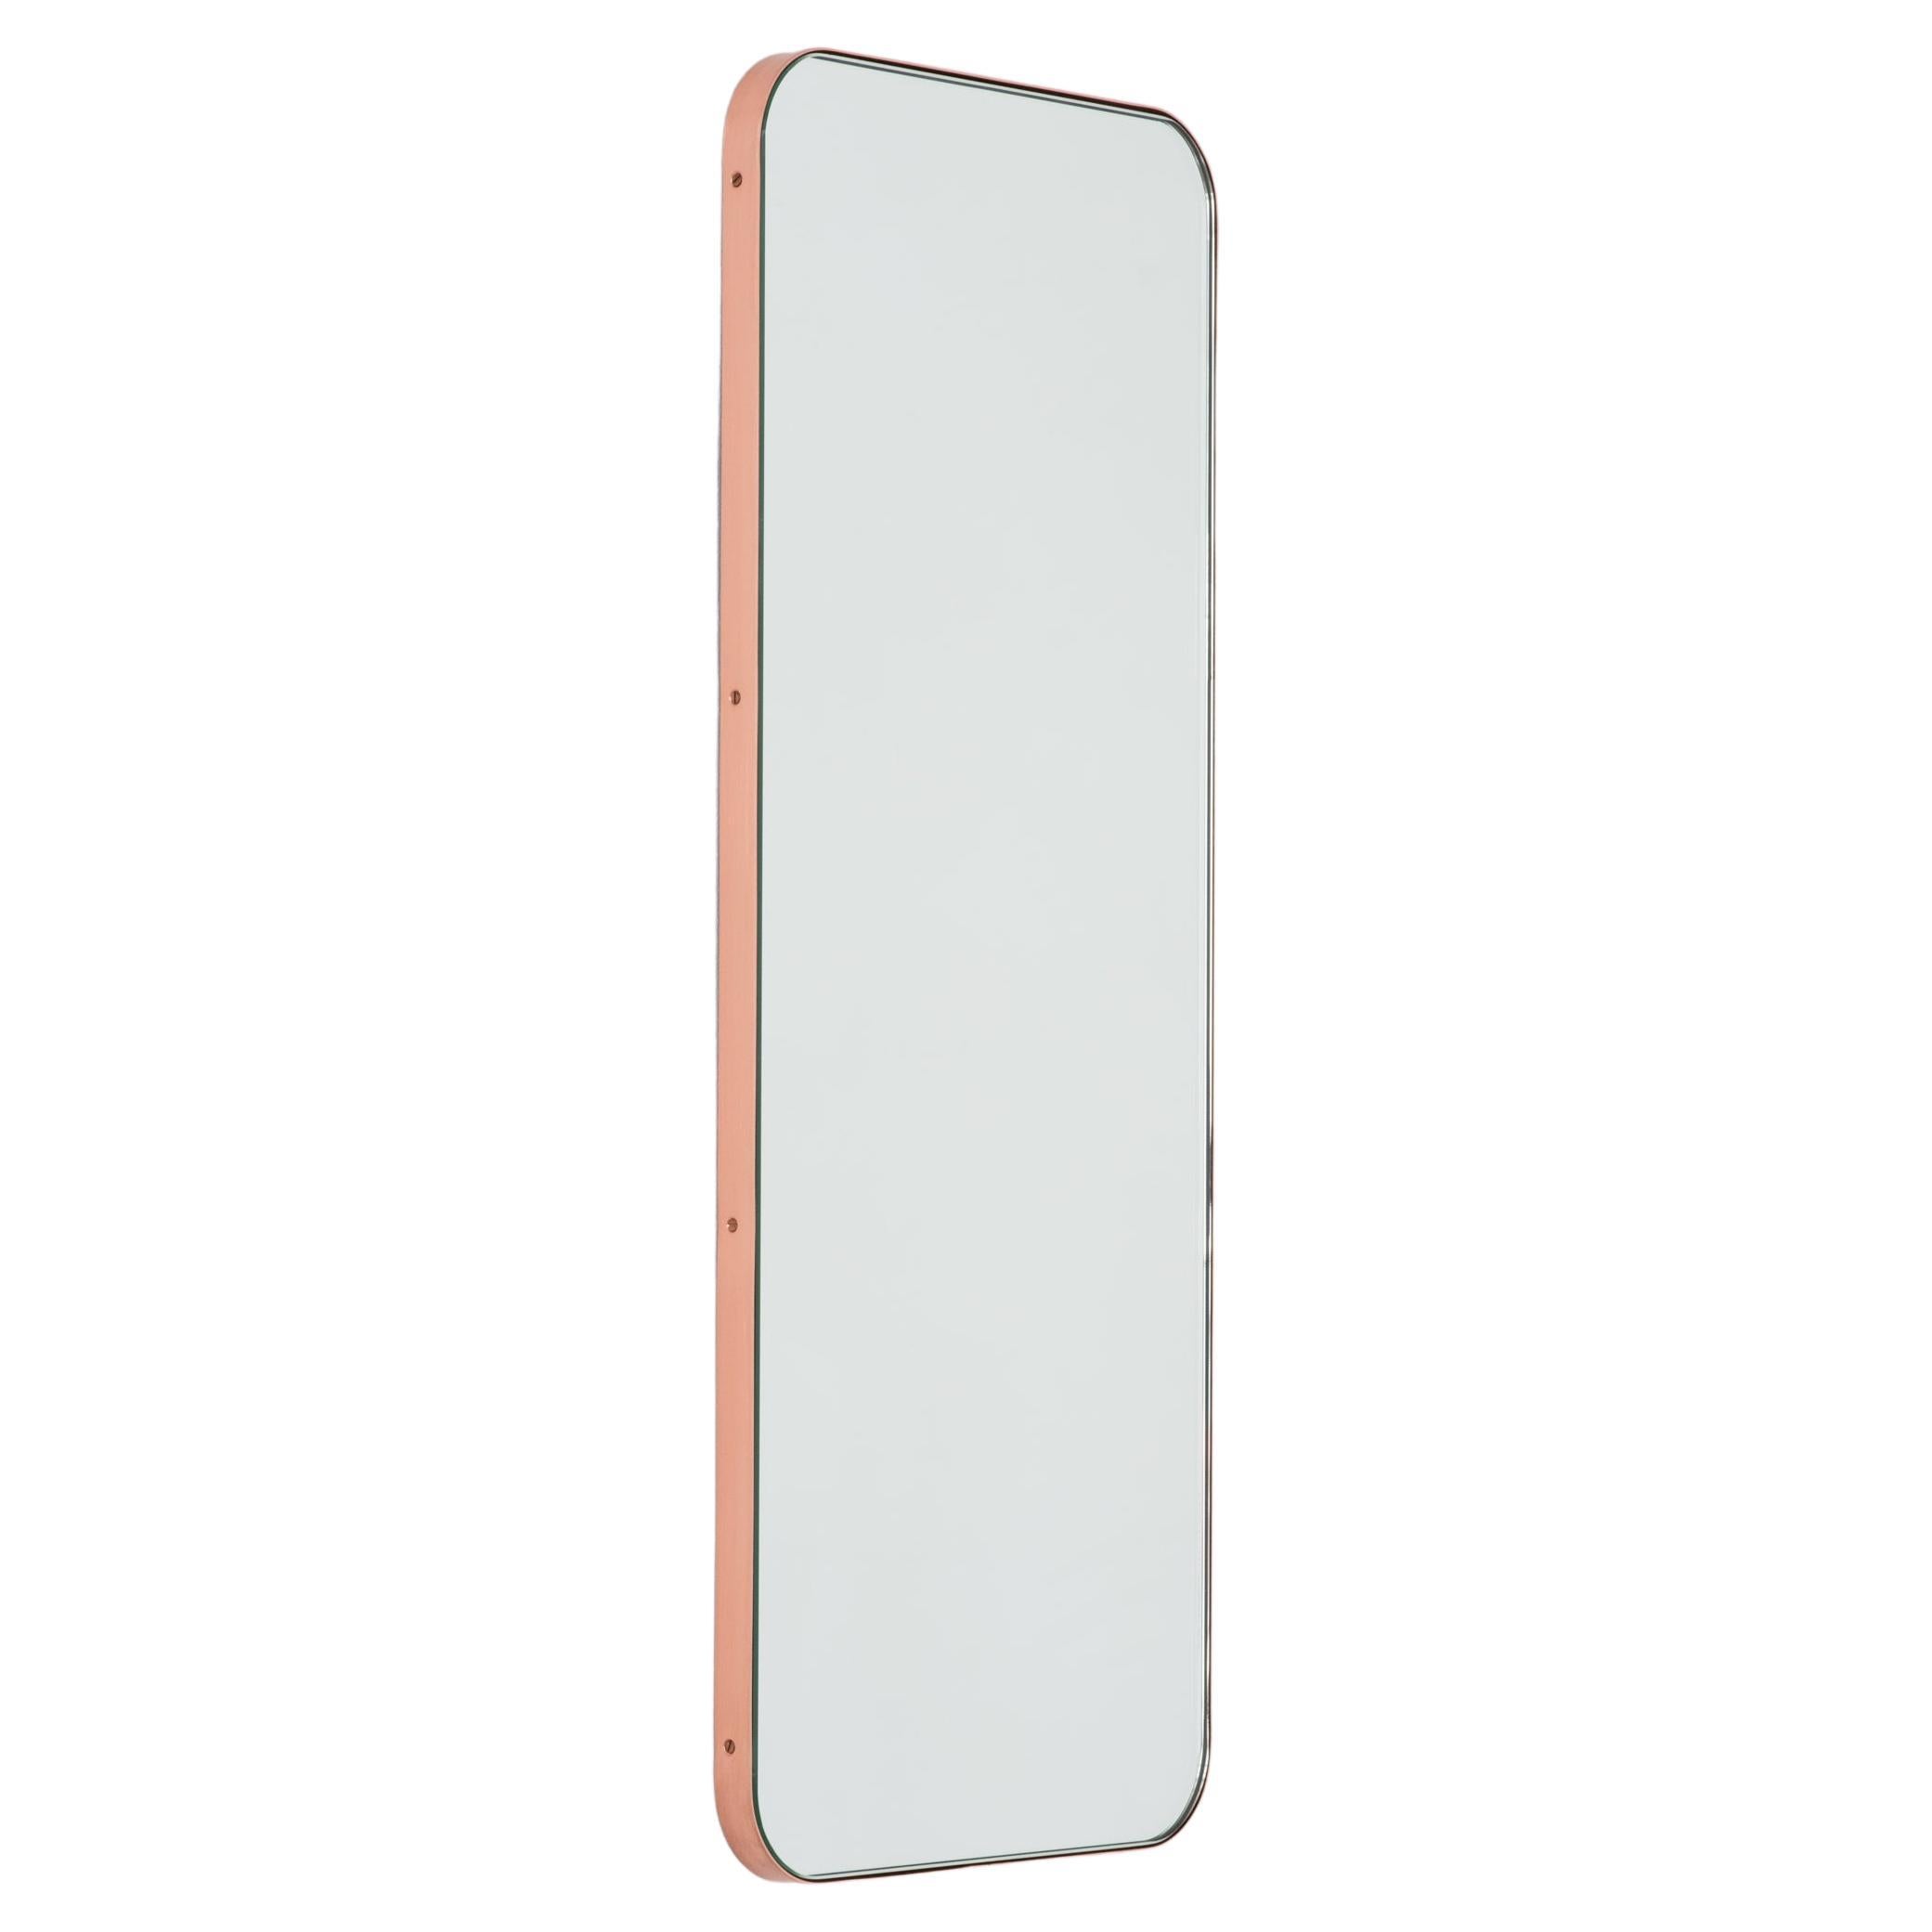 Quadris Rectangular Modern Mirror with a Copper Frame, XL For Sale